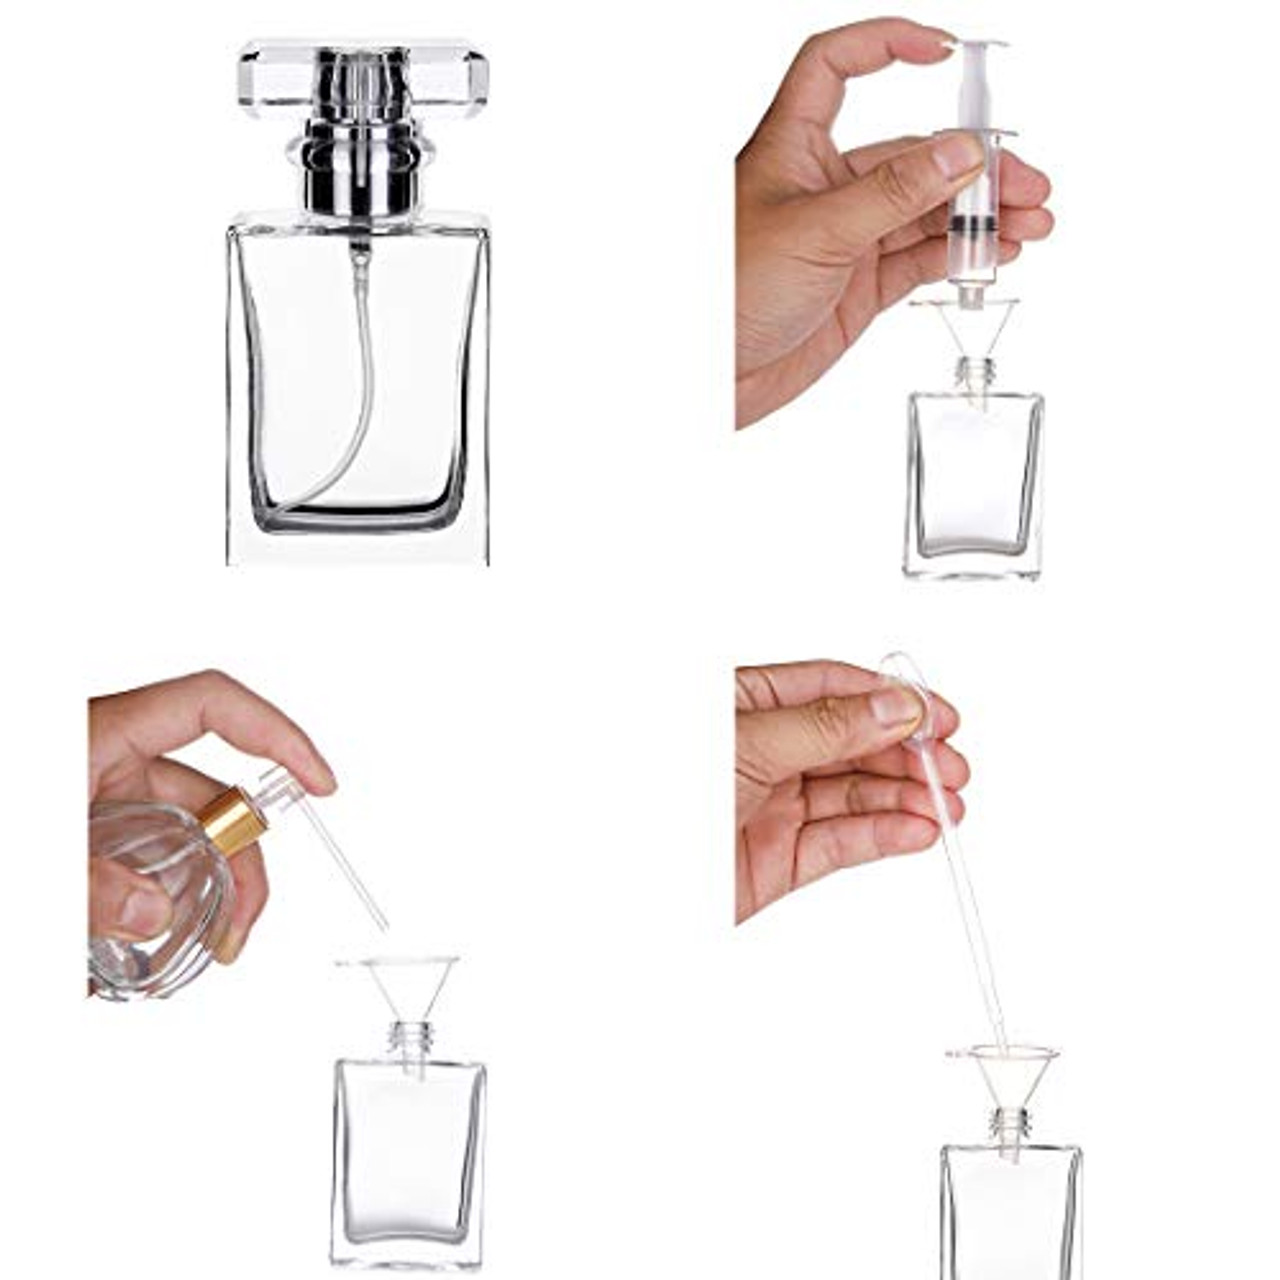 Enenes Glass Refillable Perfume Bottle 30 ml 4PCS Portable Square Empty  Glass Perfume Atomizer Bottle Clear Spray Glass Bottle Atomizer Container  with